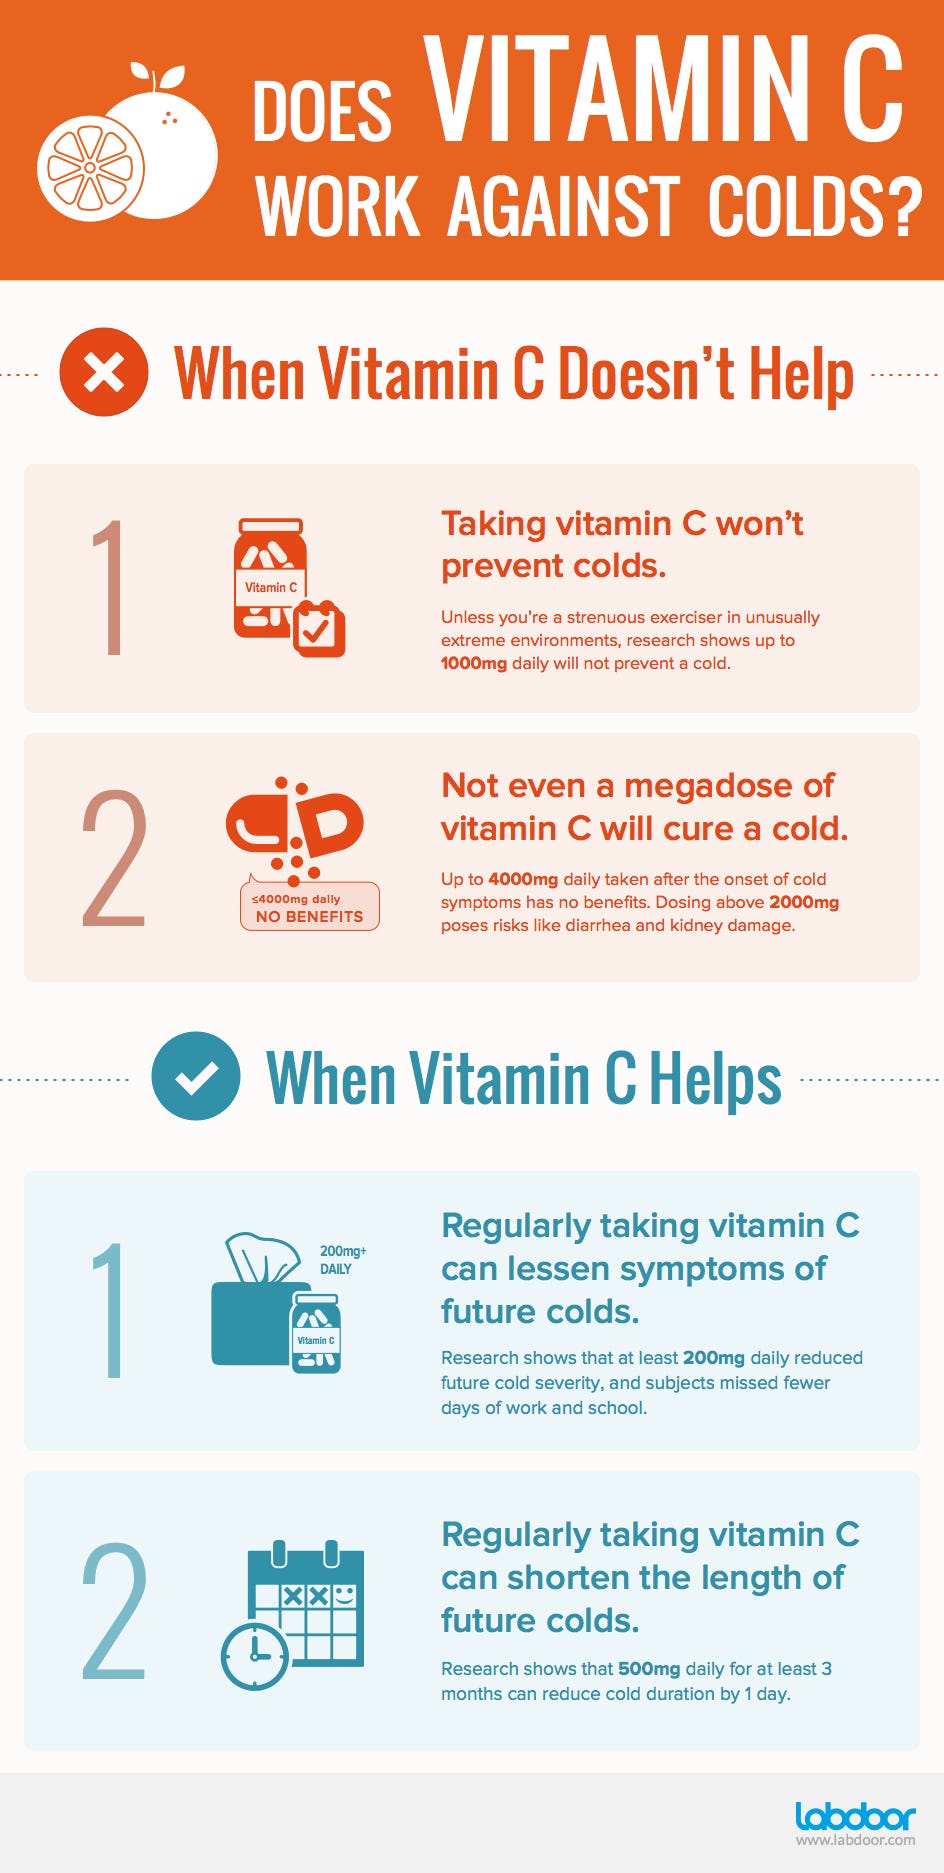 Does Vitamin C Work Against Colds? | by Labdoor | Labdoor | Medium